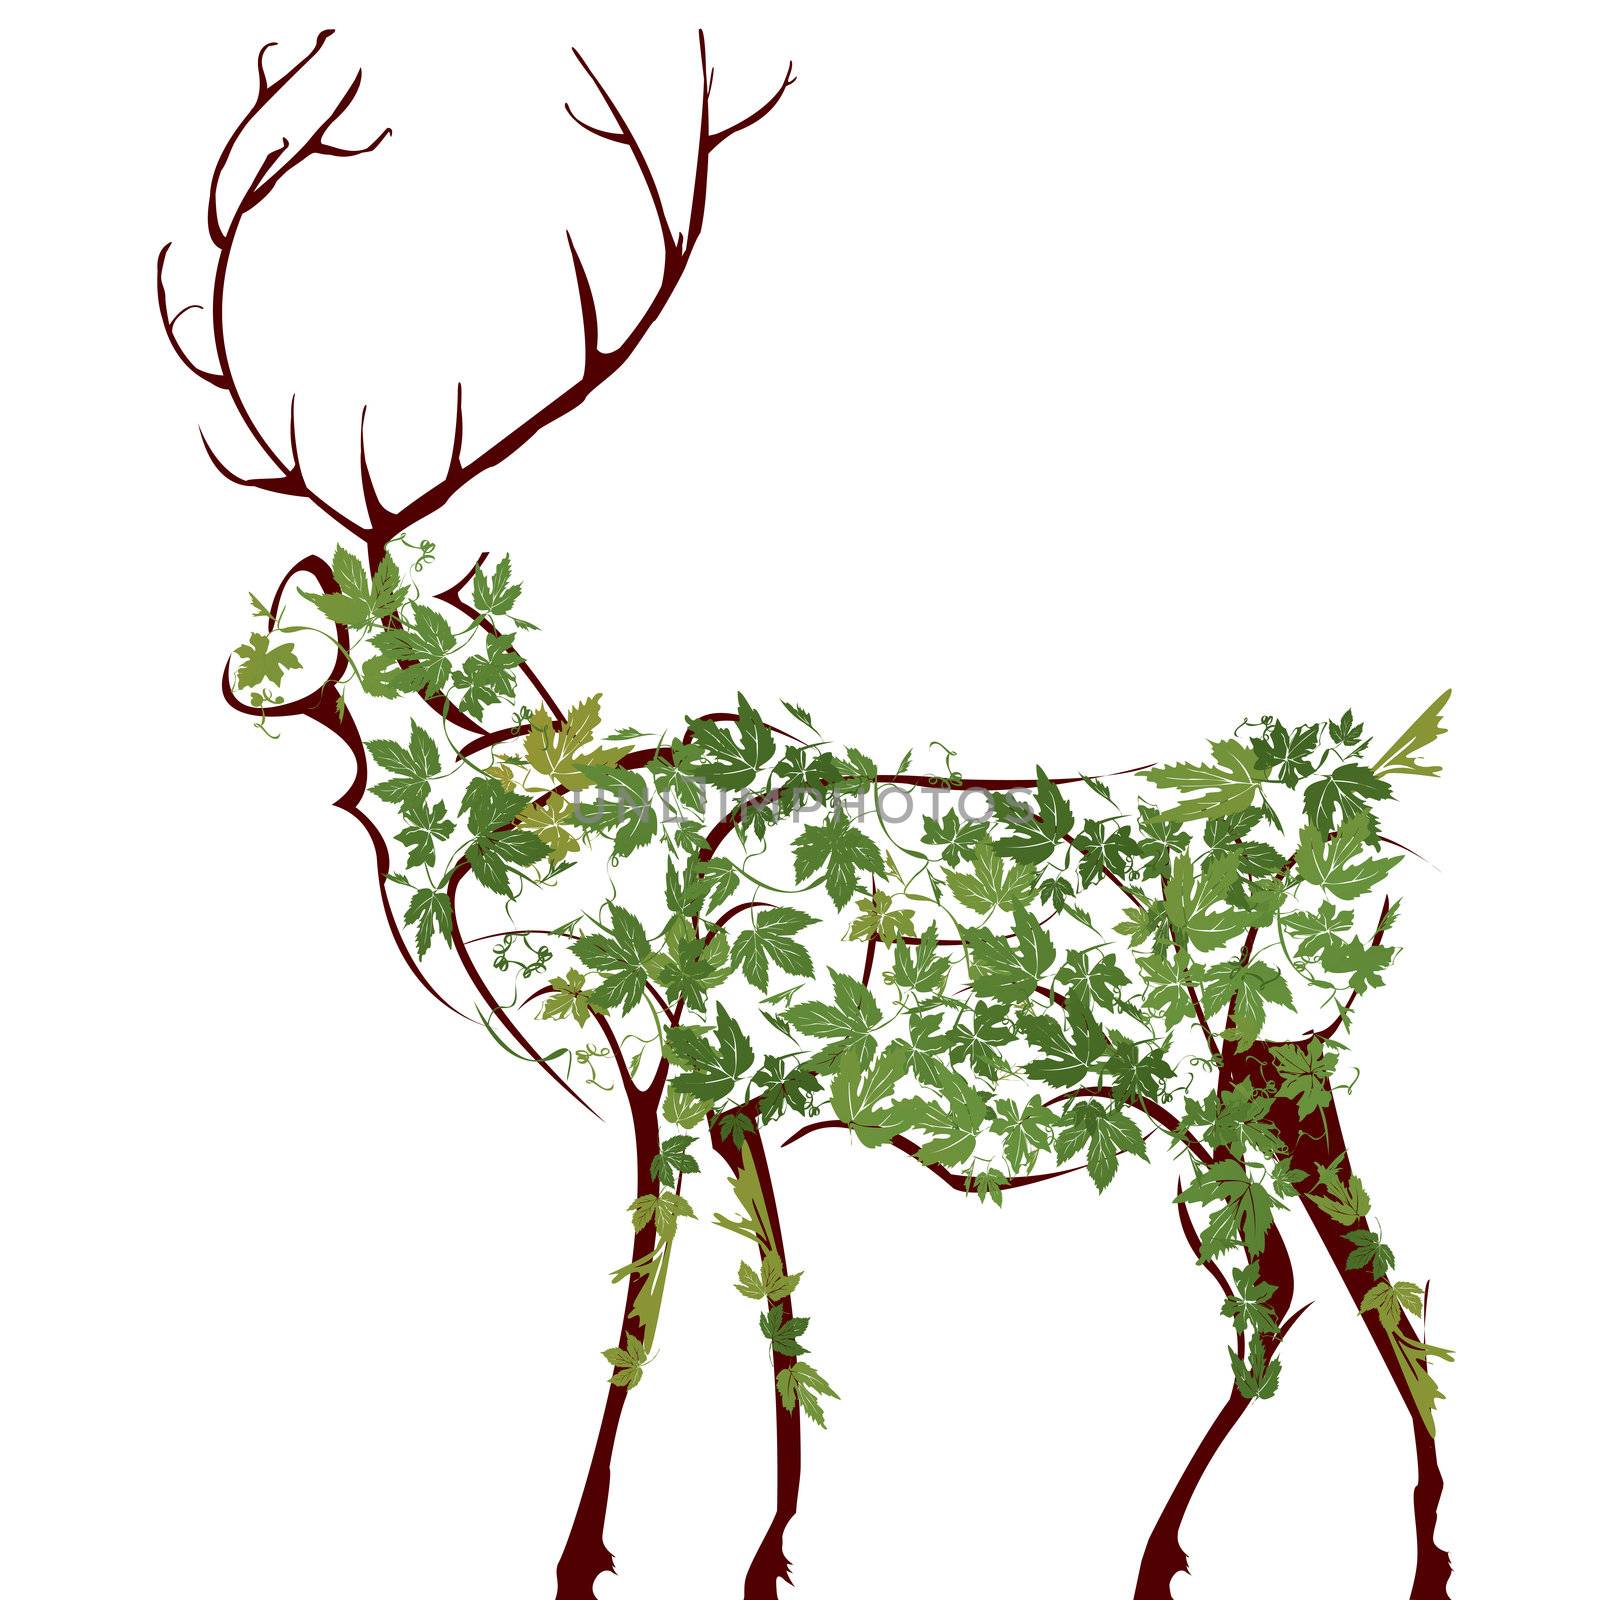 Deer illustration by Lirch